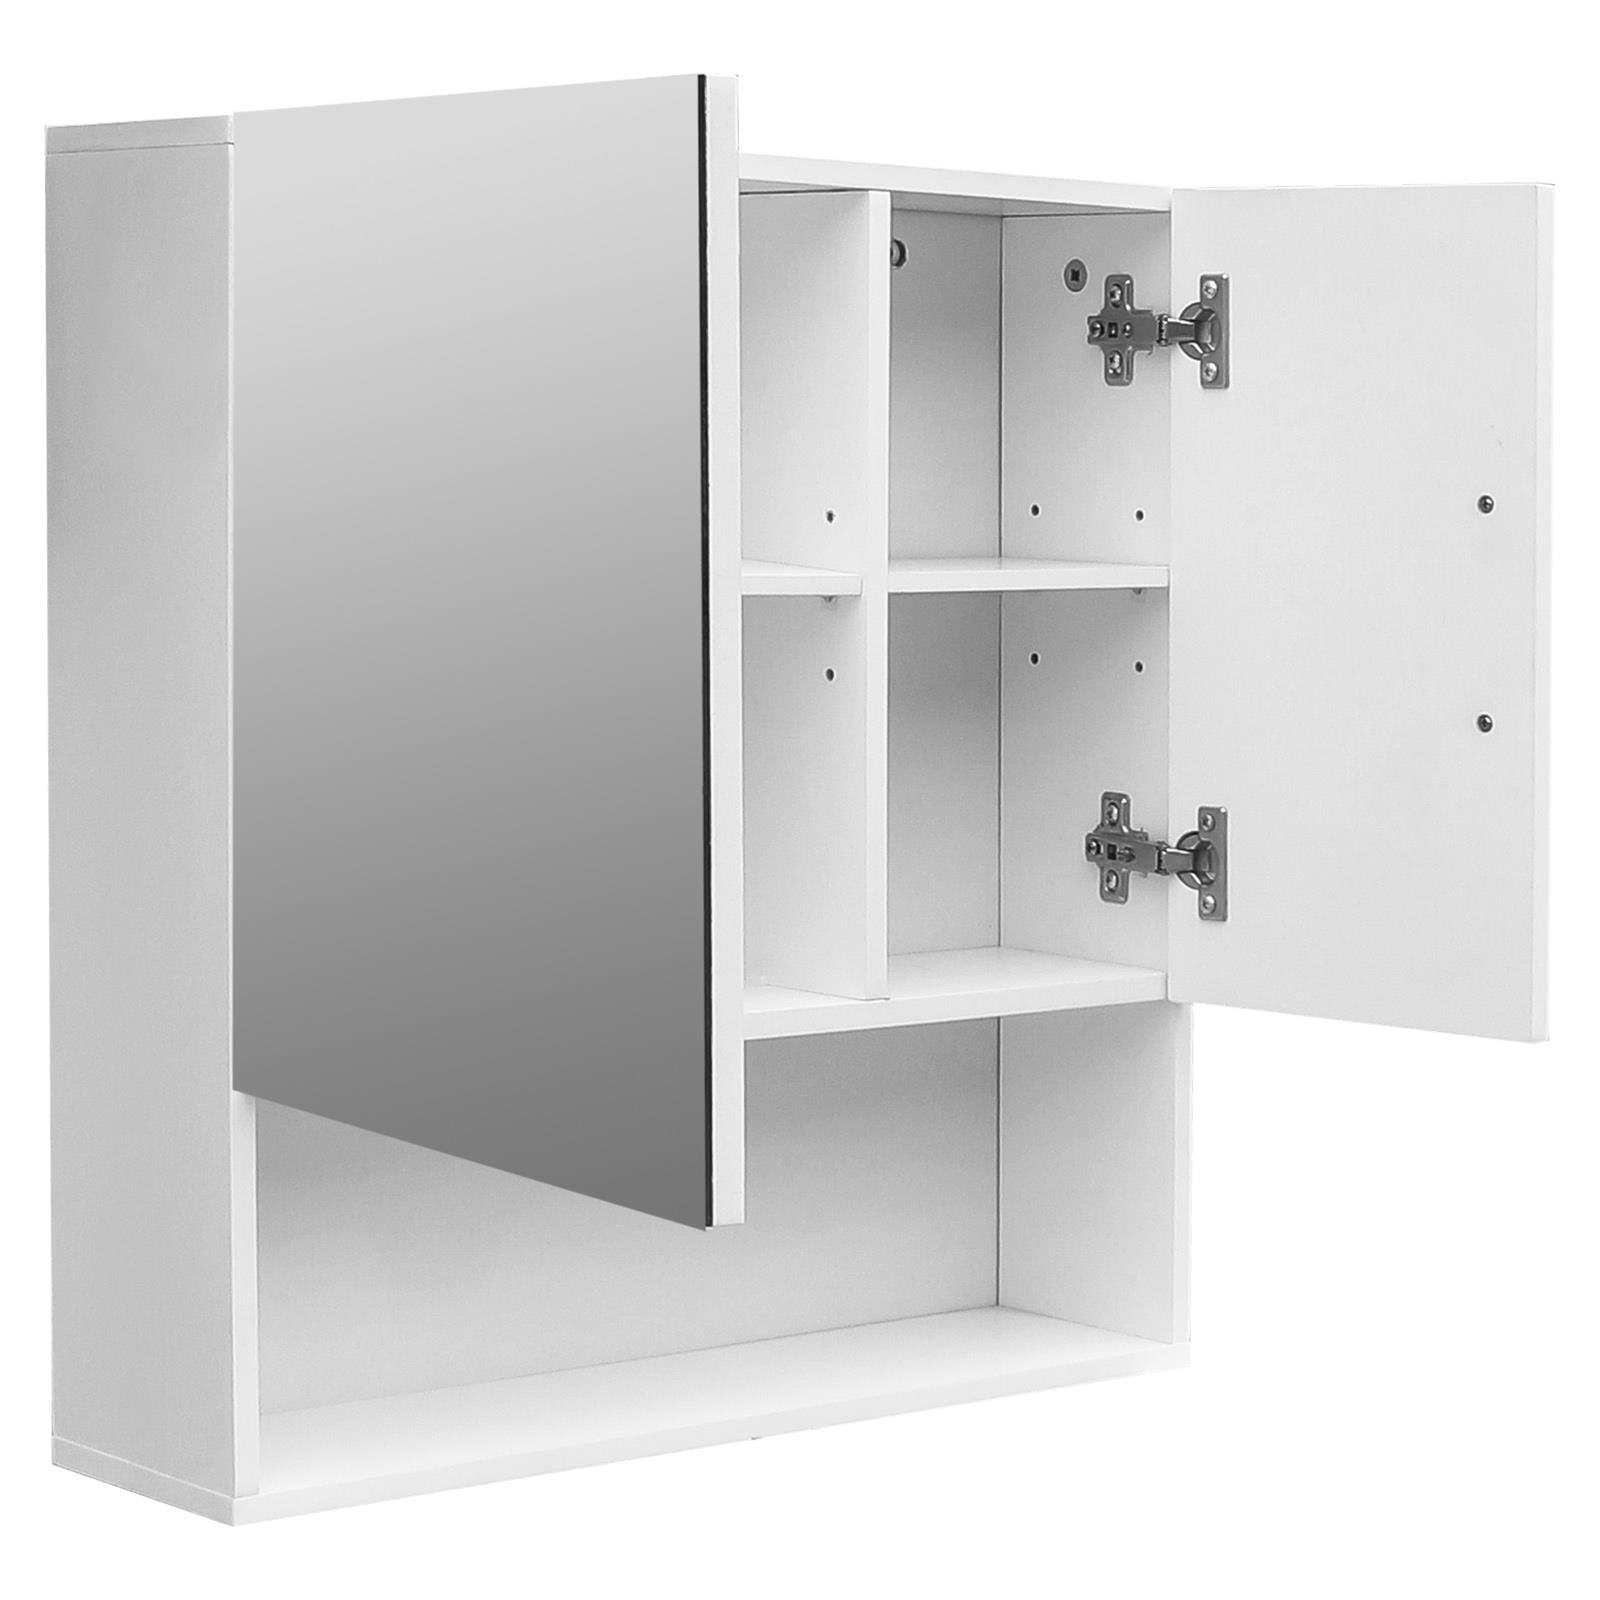 VIAGDO Wall Cabinet Bathroom Storage Cabinet Wall Mounted with Adjustable  Shelves Inside, Double Door Medicine Cabinet, Utility Cabinet Organizer  Over